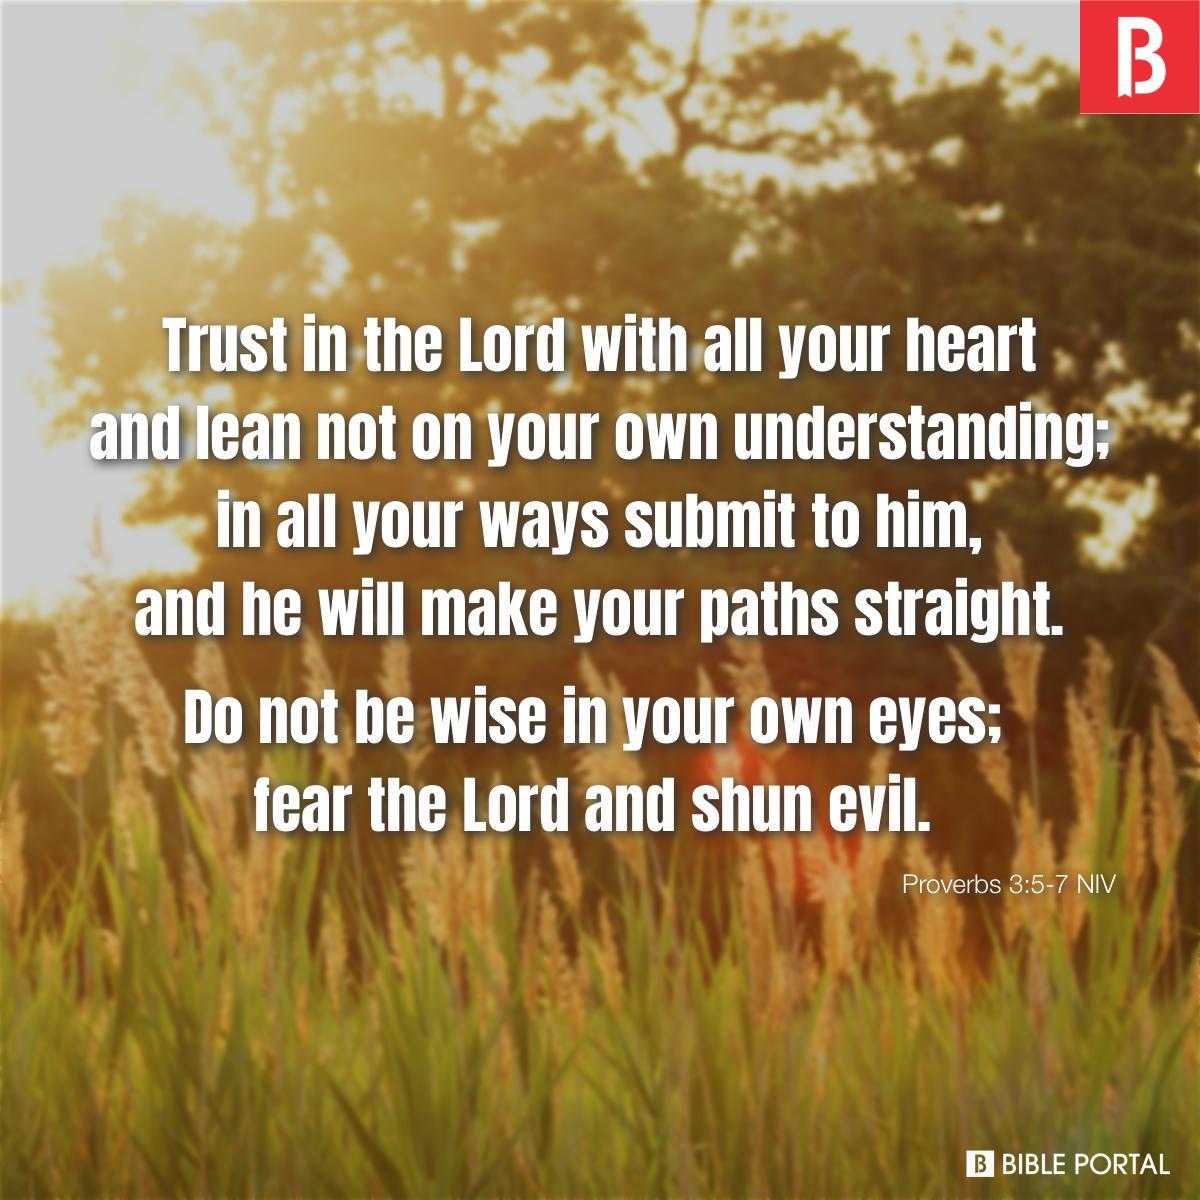 Proverbs 3:5-7 NIV